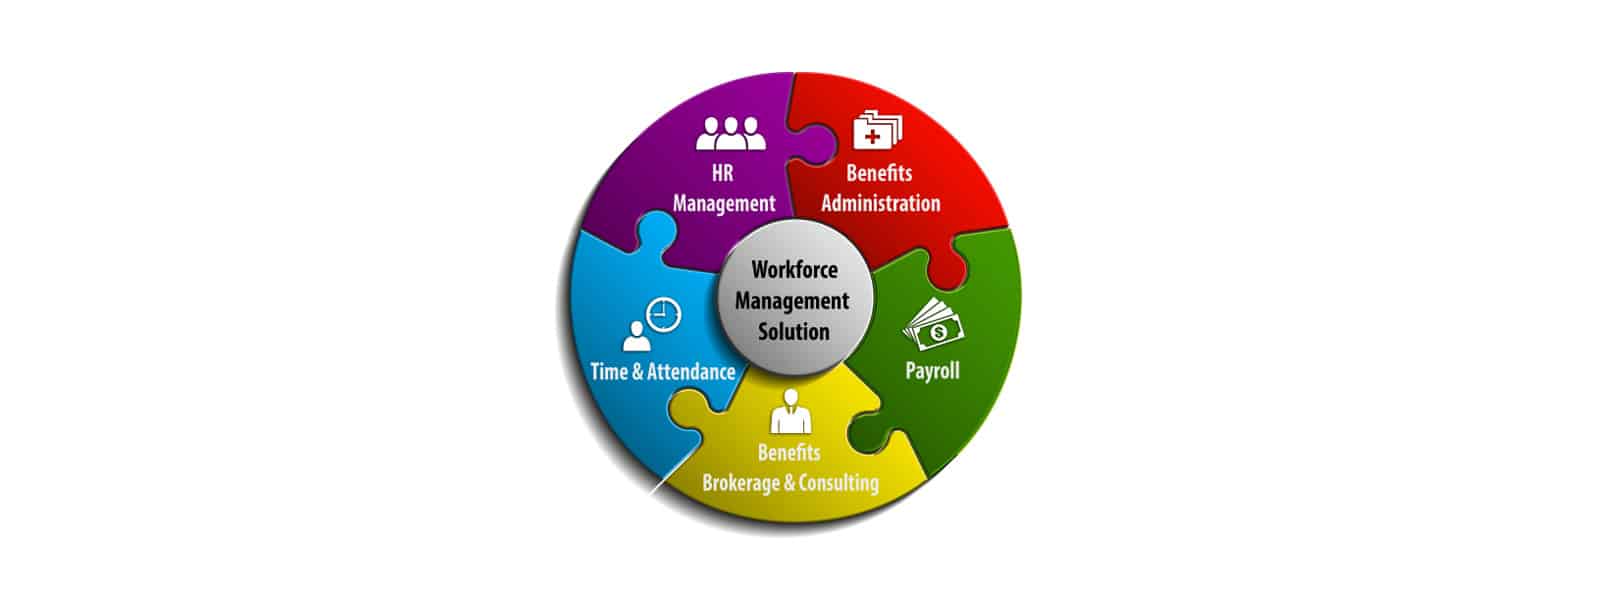 Workforce management solution graphic on PSA Insurance & Financial Services' website